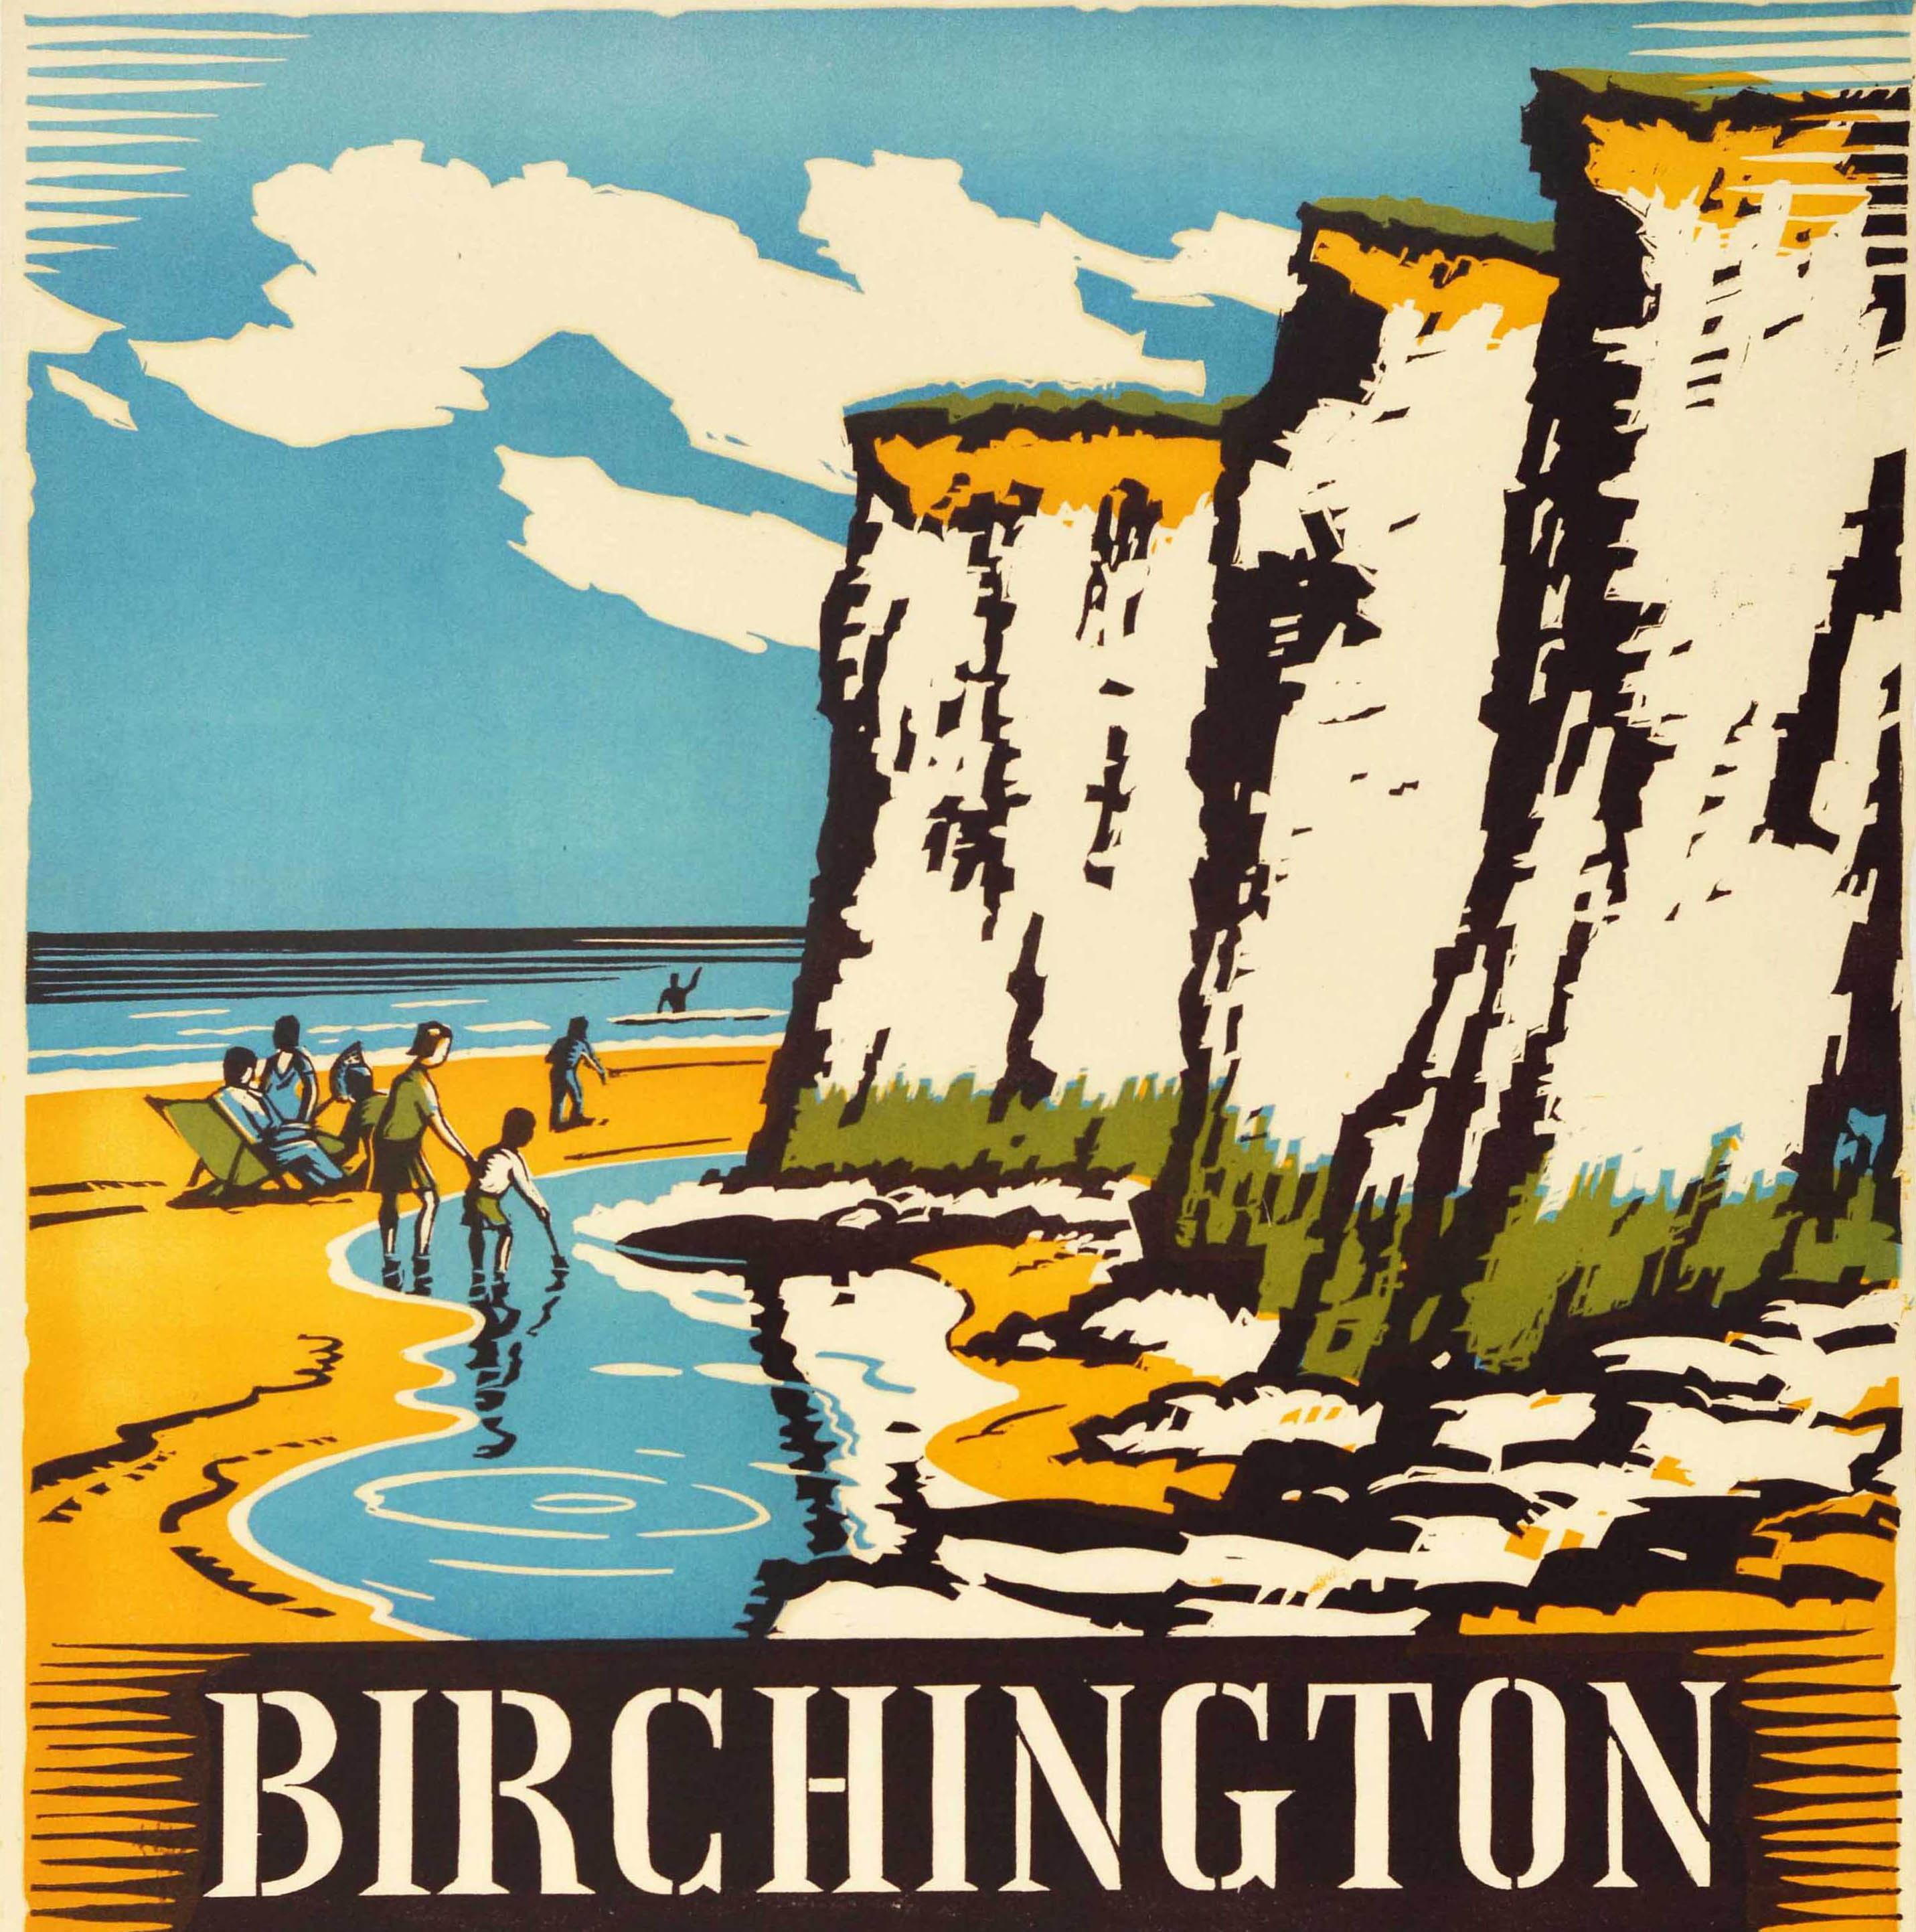 British Original Vintage Travel Poster Birchington Kent Beach Sea Wall England Design For Sale